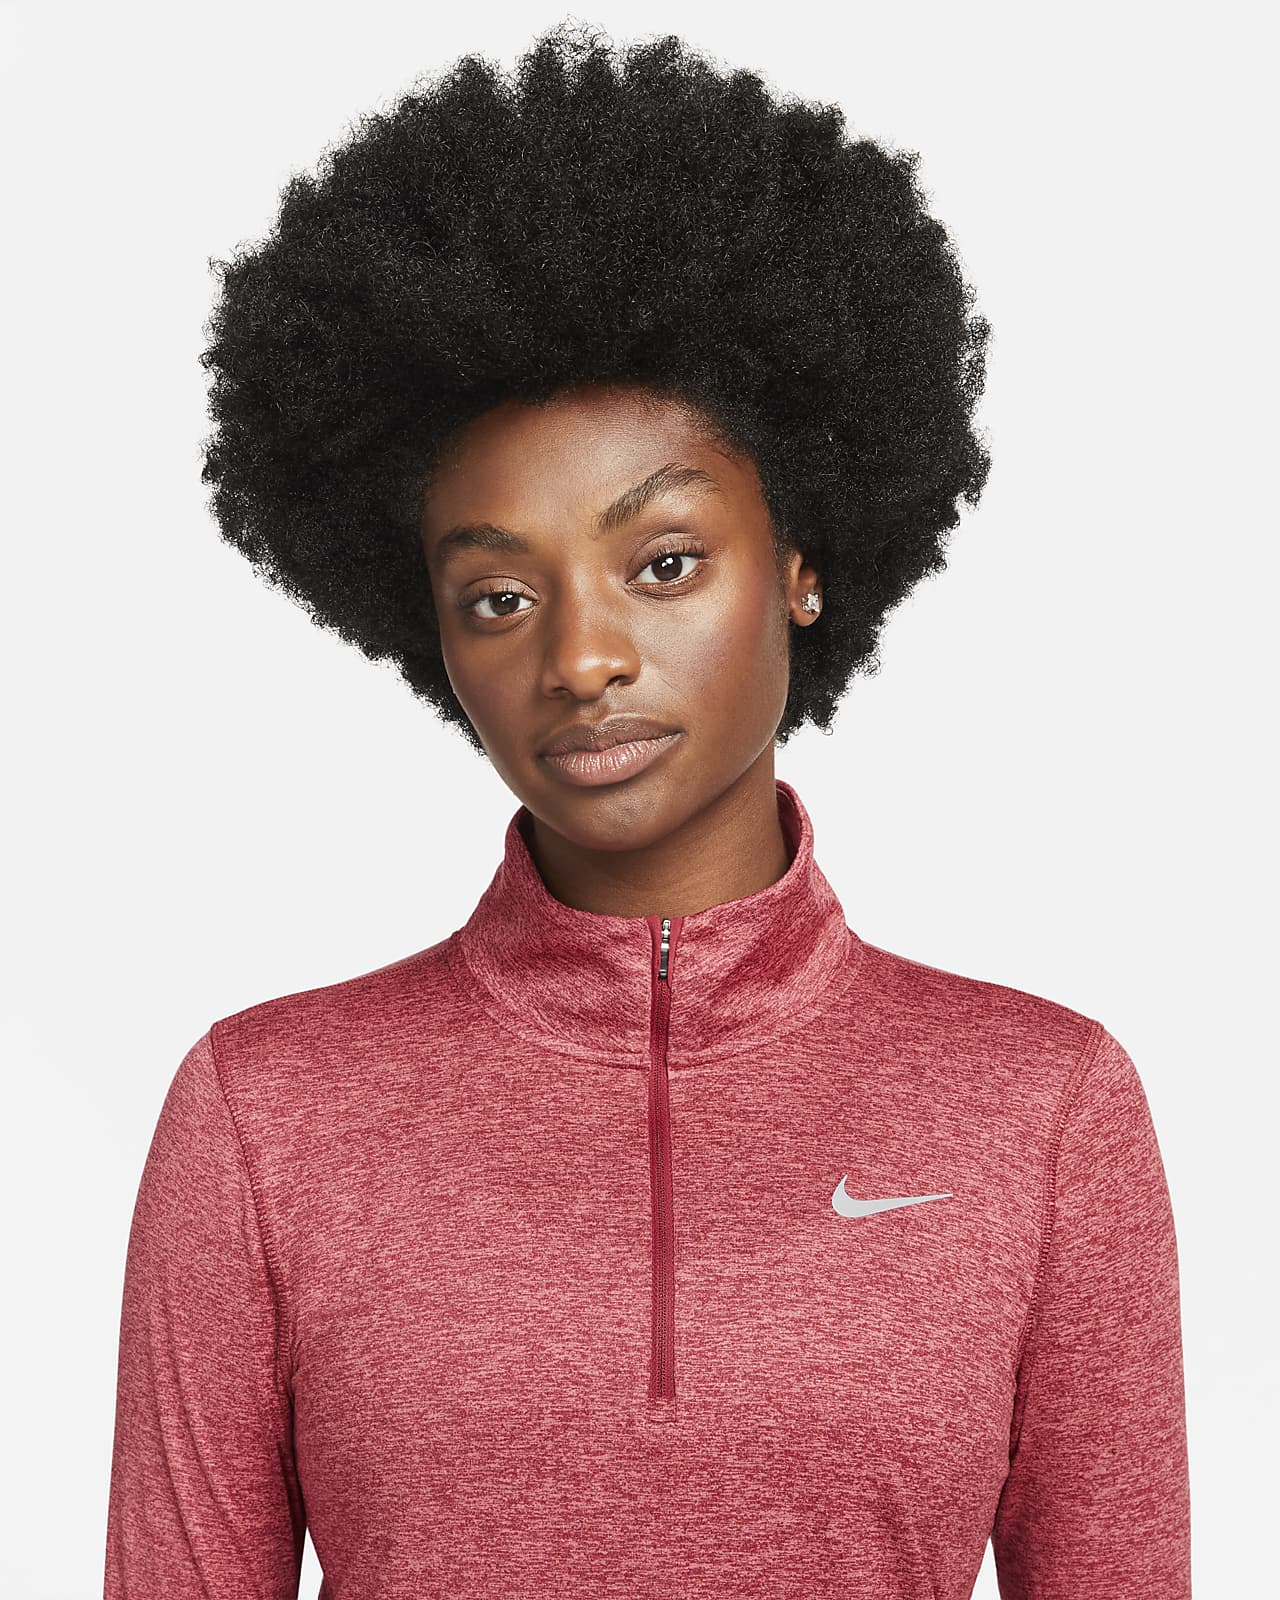 Nike Element Women's 1/2-Zip Running Top. Nike CA